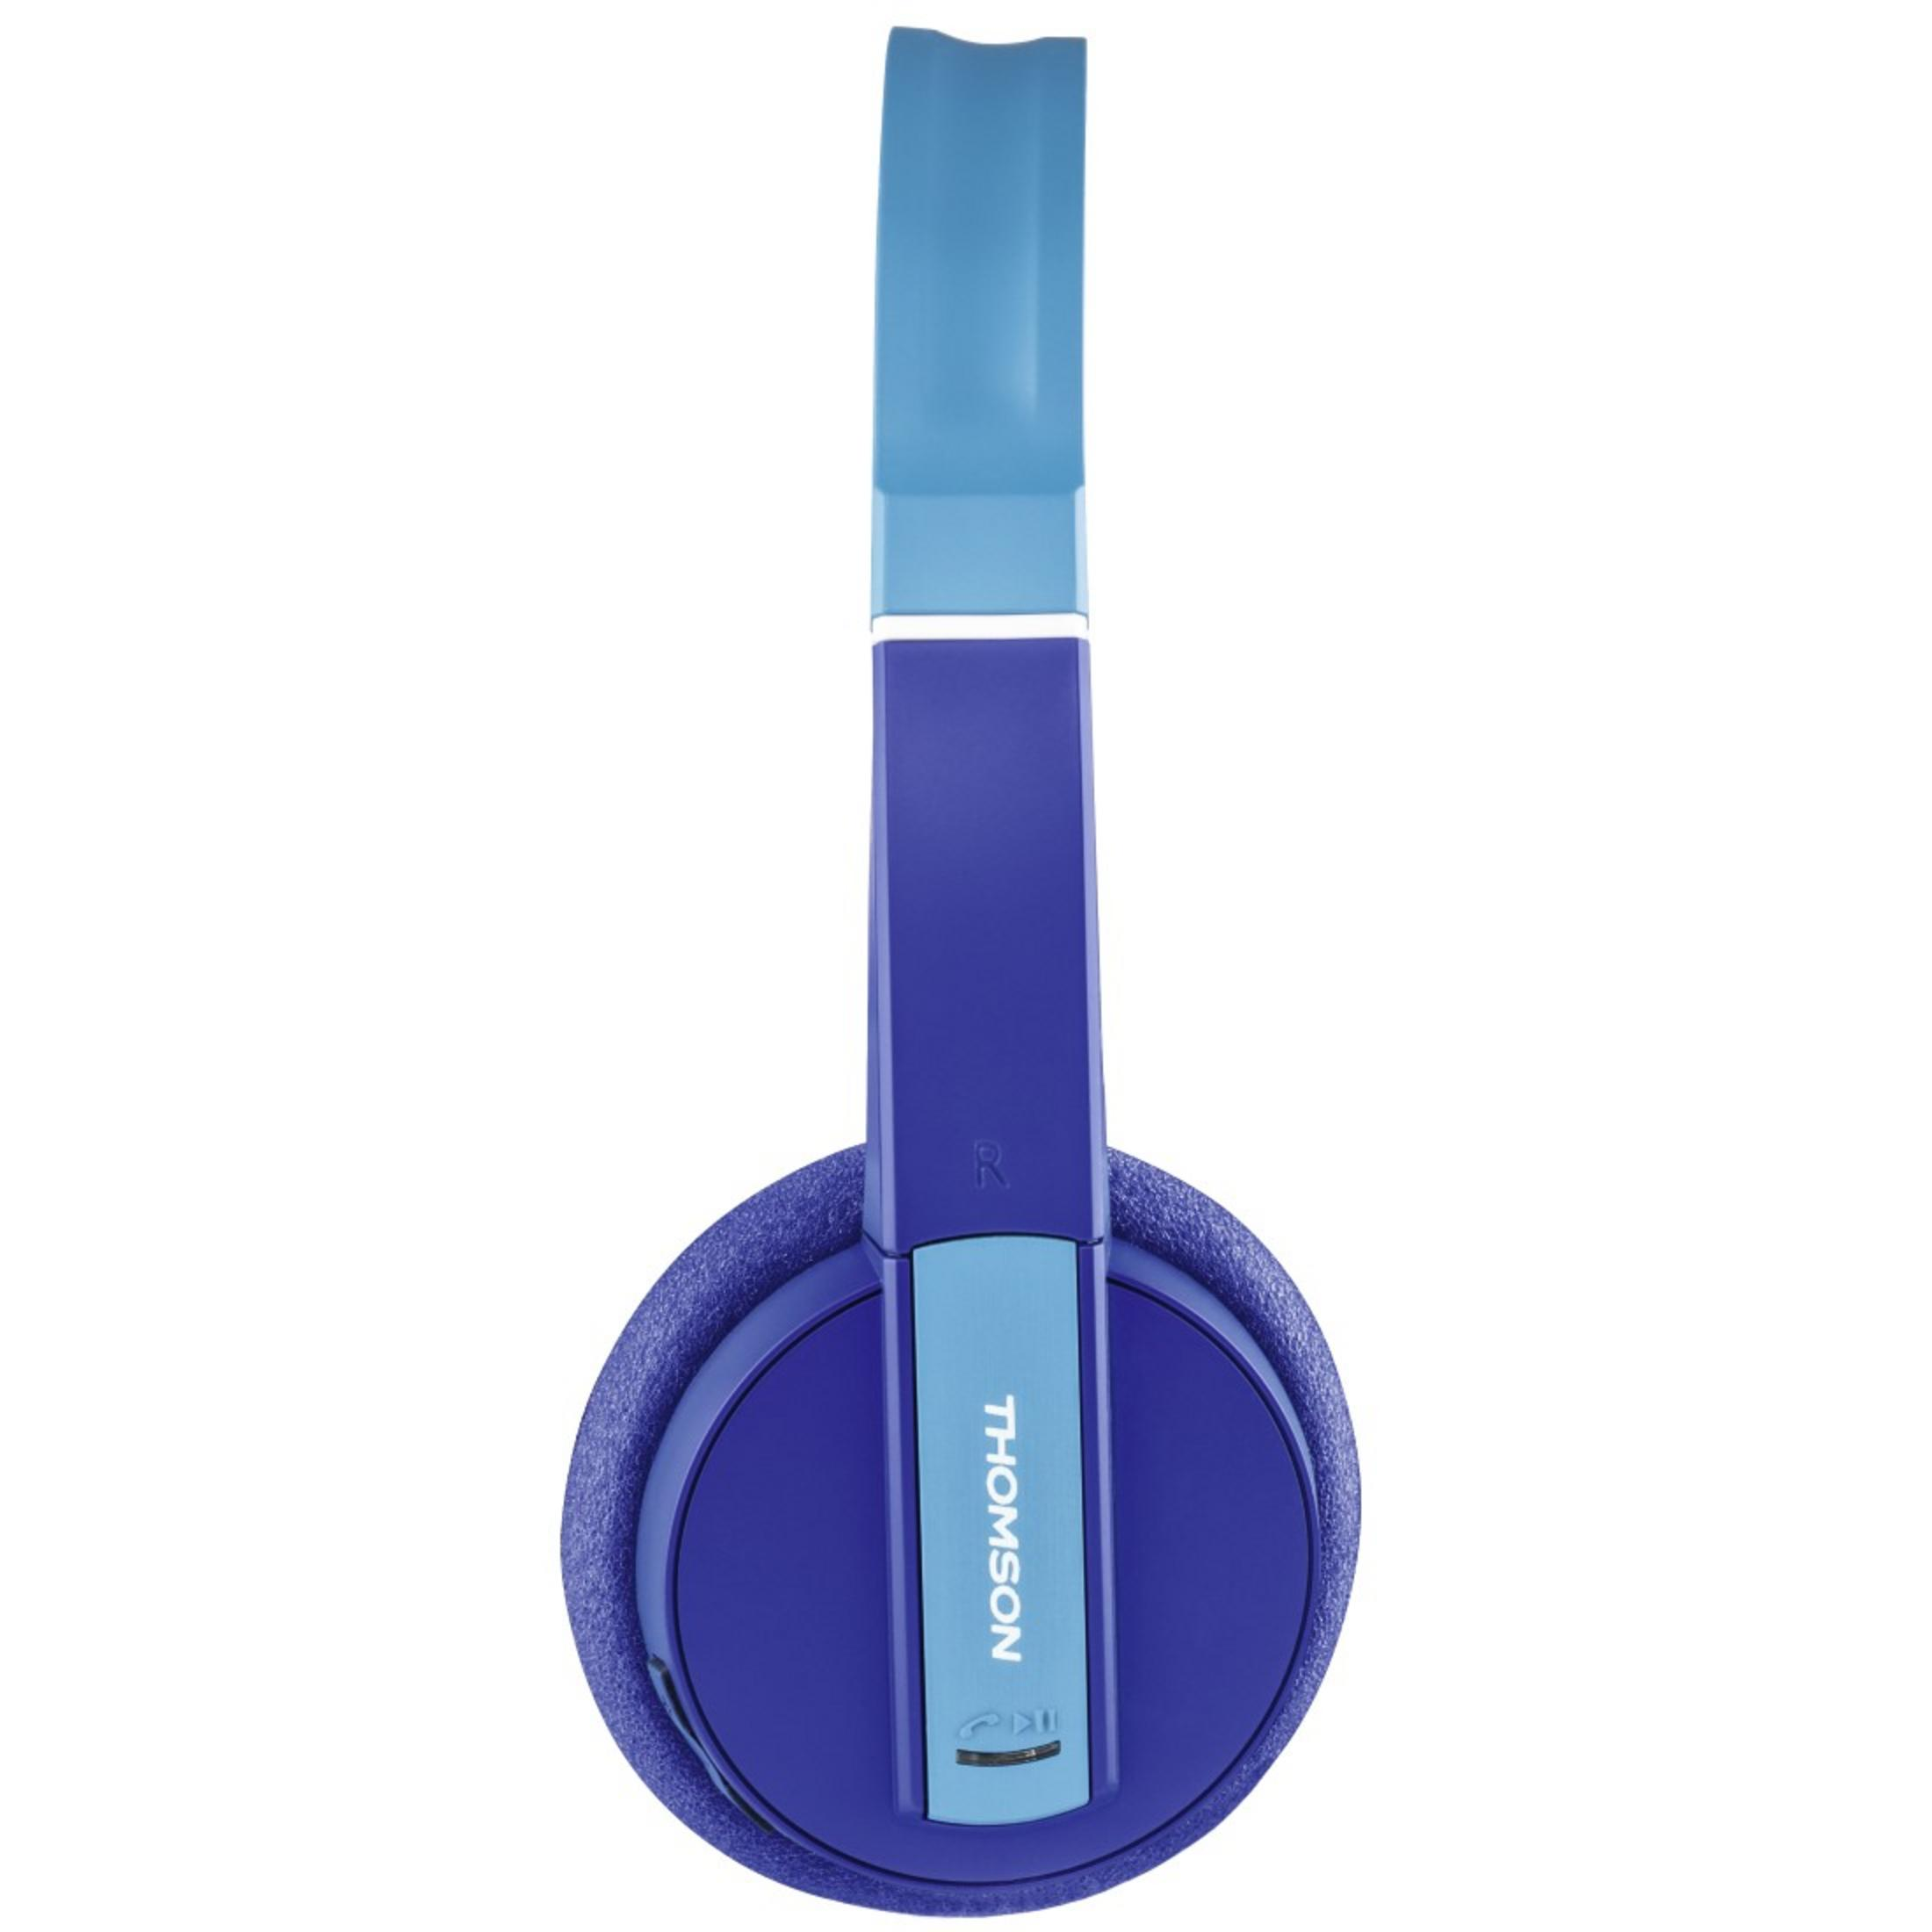 THOMSON 131973 WHP Kopfhörer Bluetooth Blau HS.F.KIDS, BT On-ear 6017B